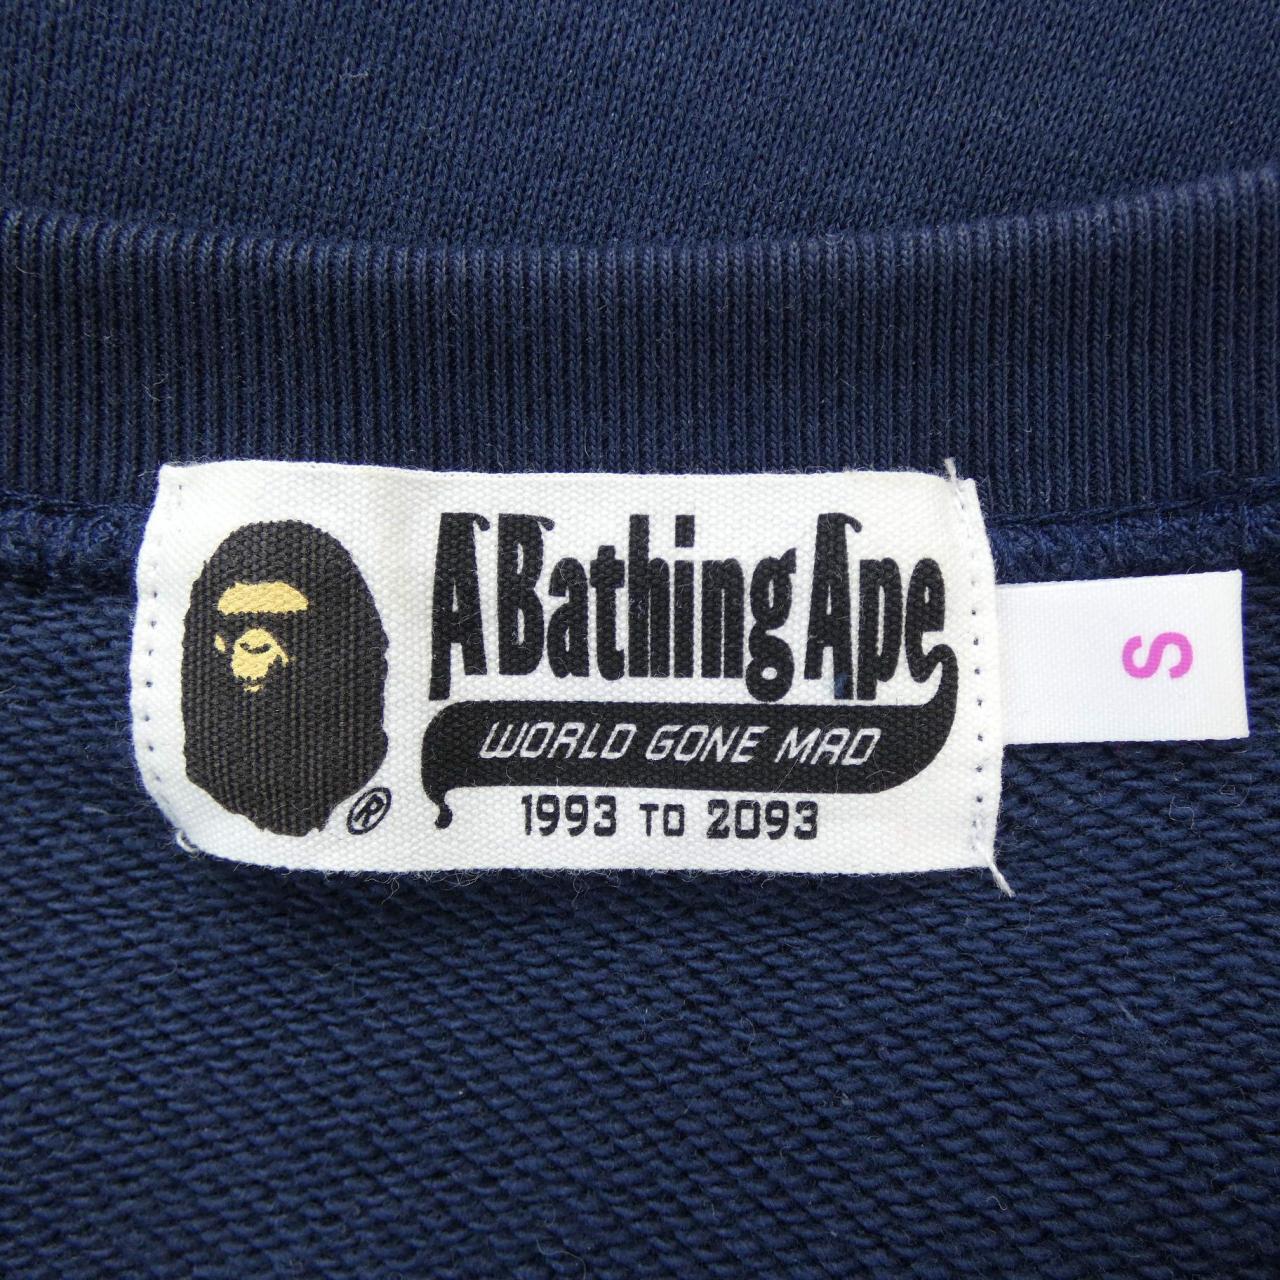 A Bathing Ape Sweatshirt